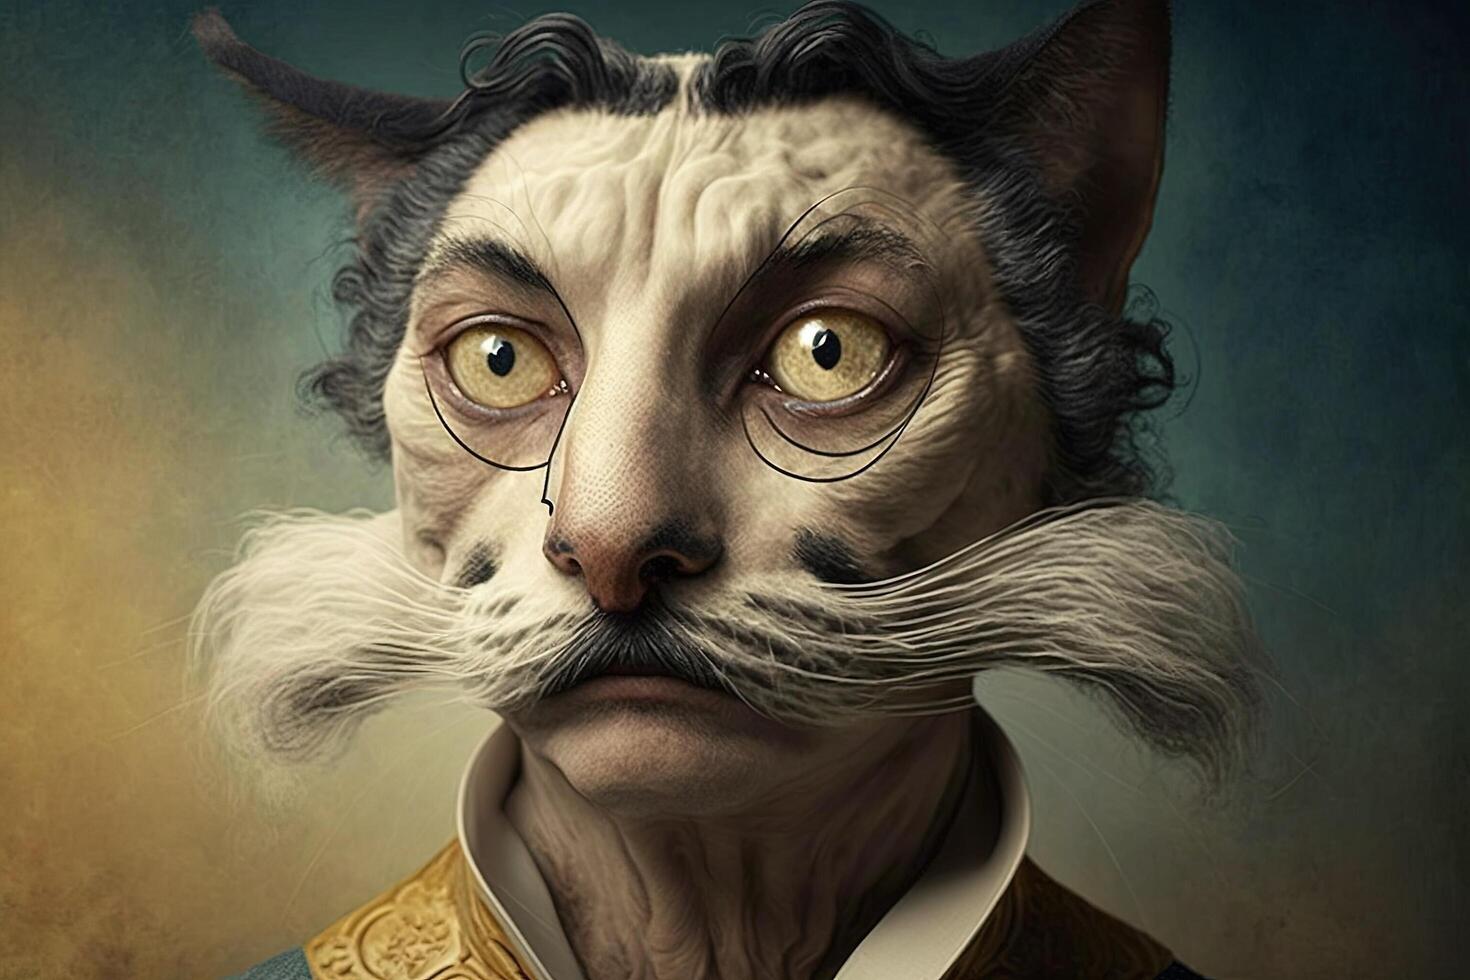 Cat as Salvador Dali famous historical character portrait illustration photo